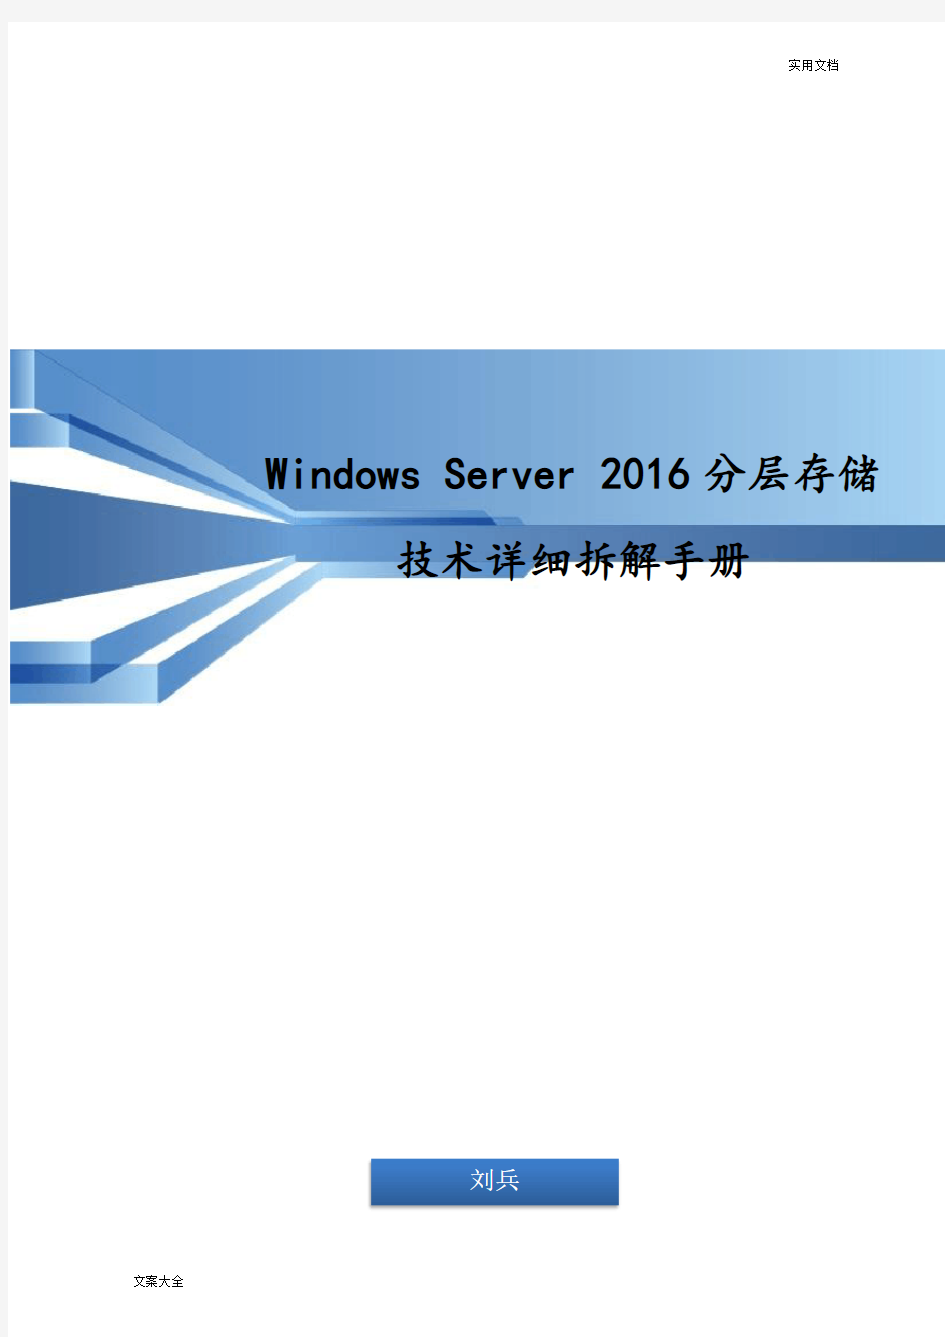 WindowsServer2016分层存储技术详细拆解手册簿